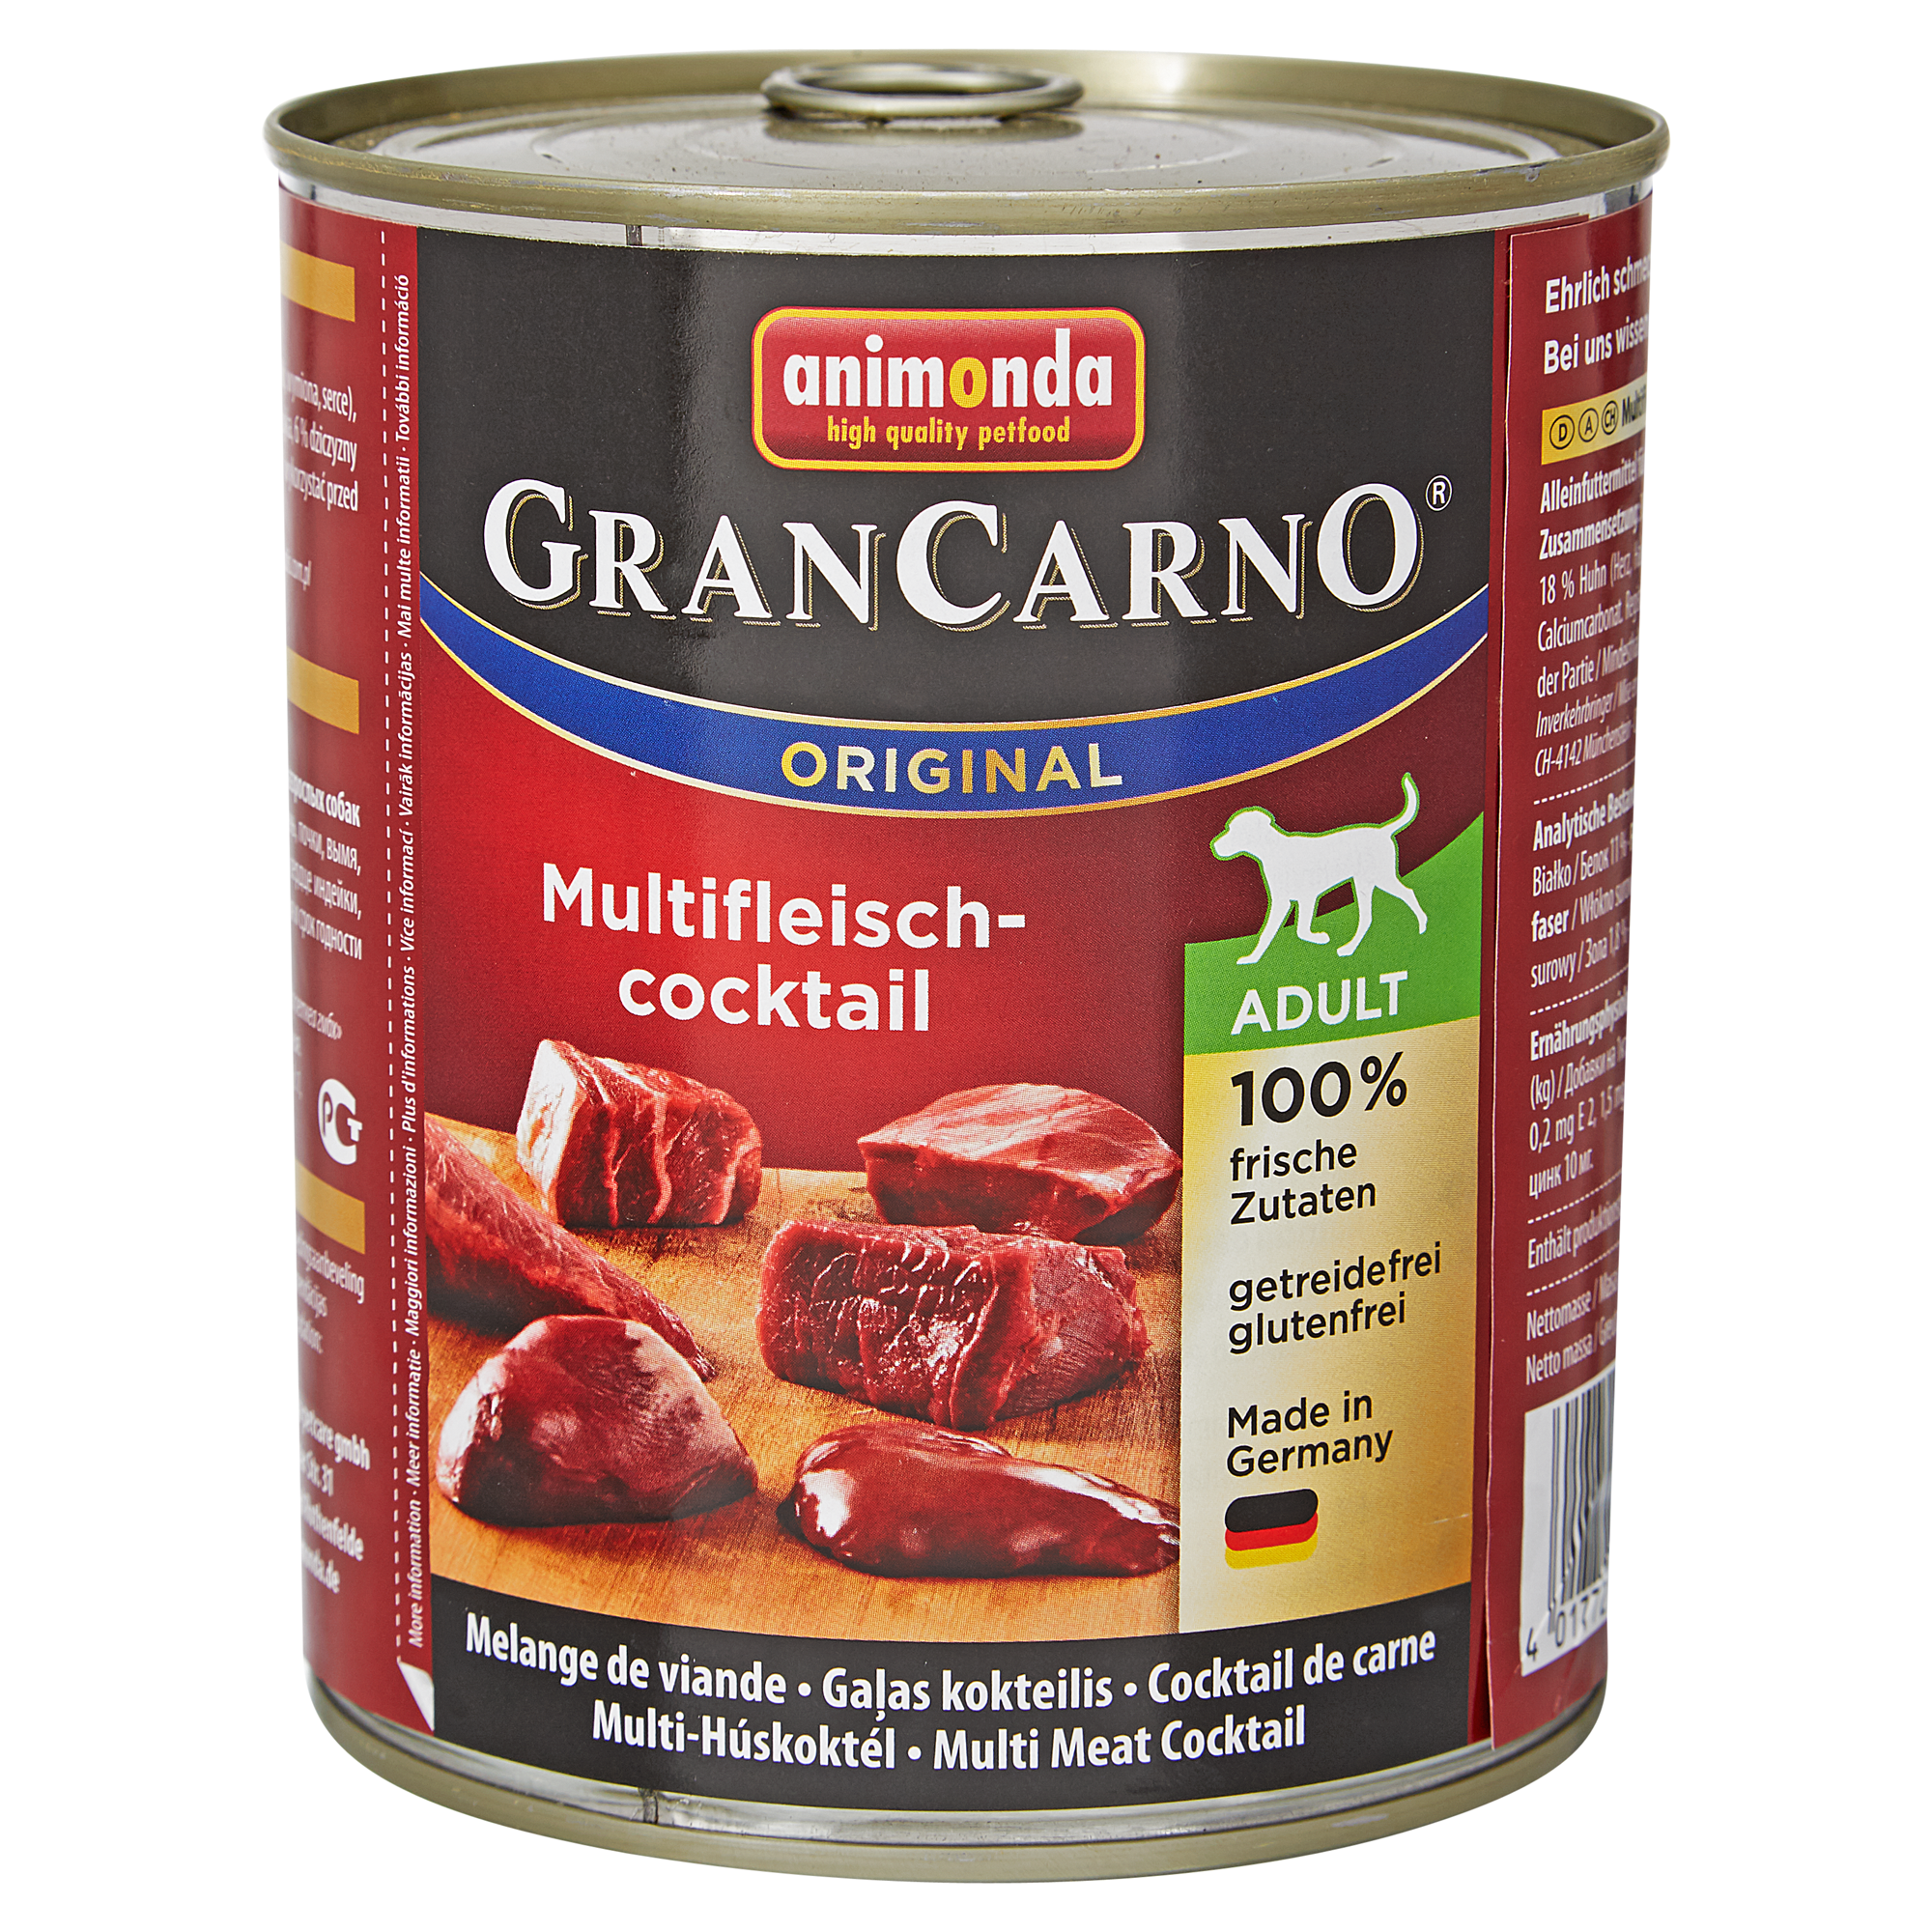 Hundenassfutter "Gran Carno" Original Multifleischcocktail 800 g + product picture